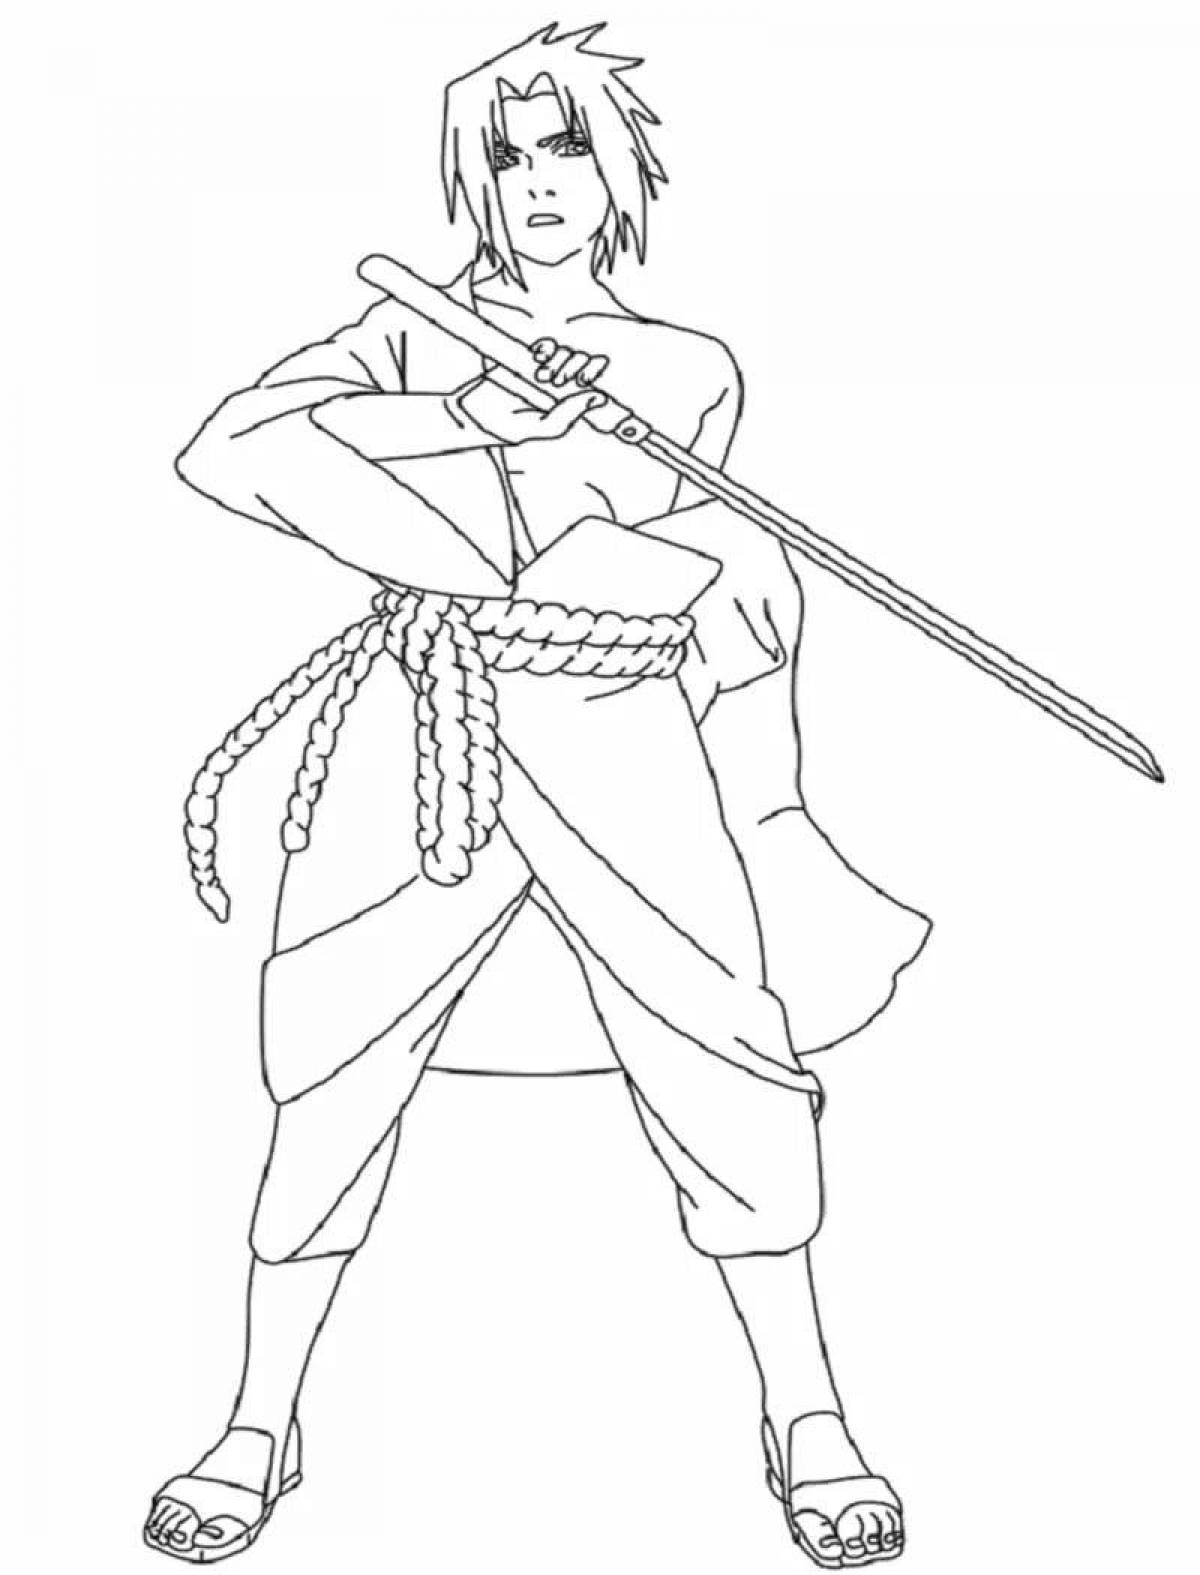 Glorious uchiha sasuke coloring page